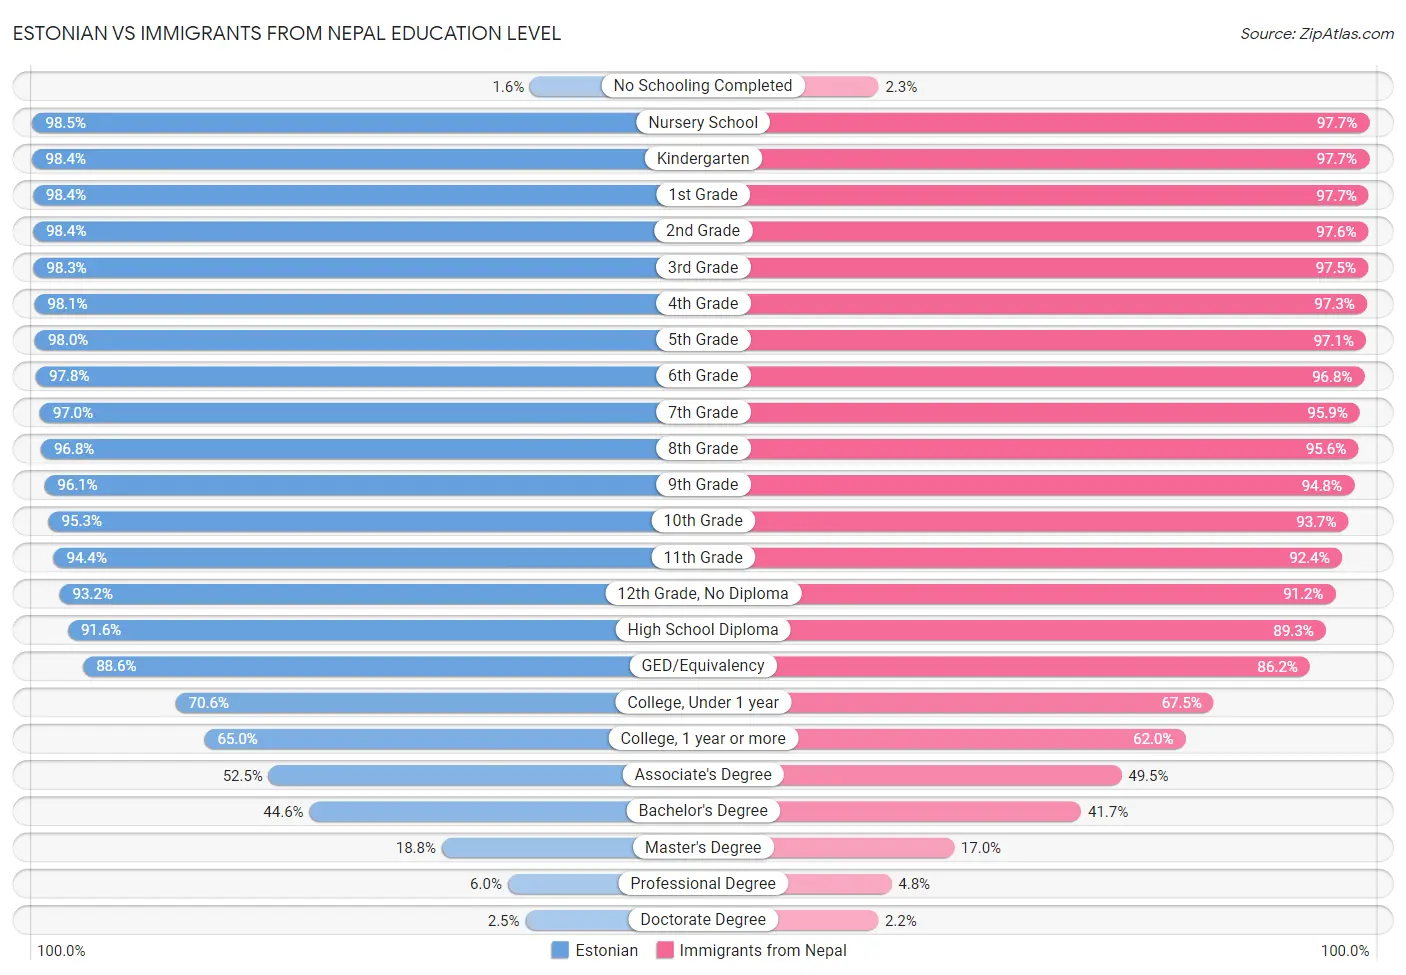 Estonian vs Immigrants from Nepal Education Level